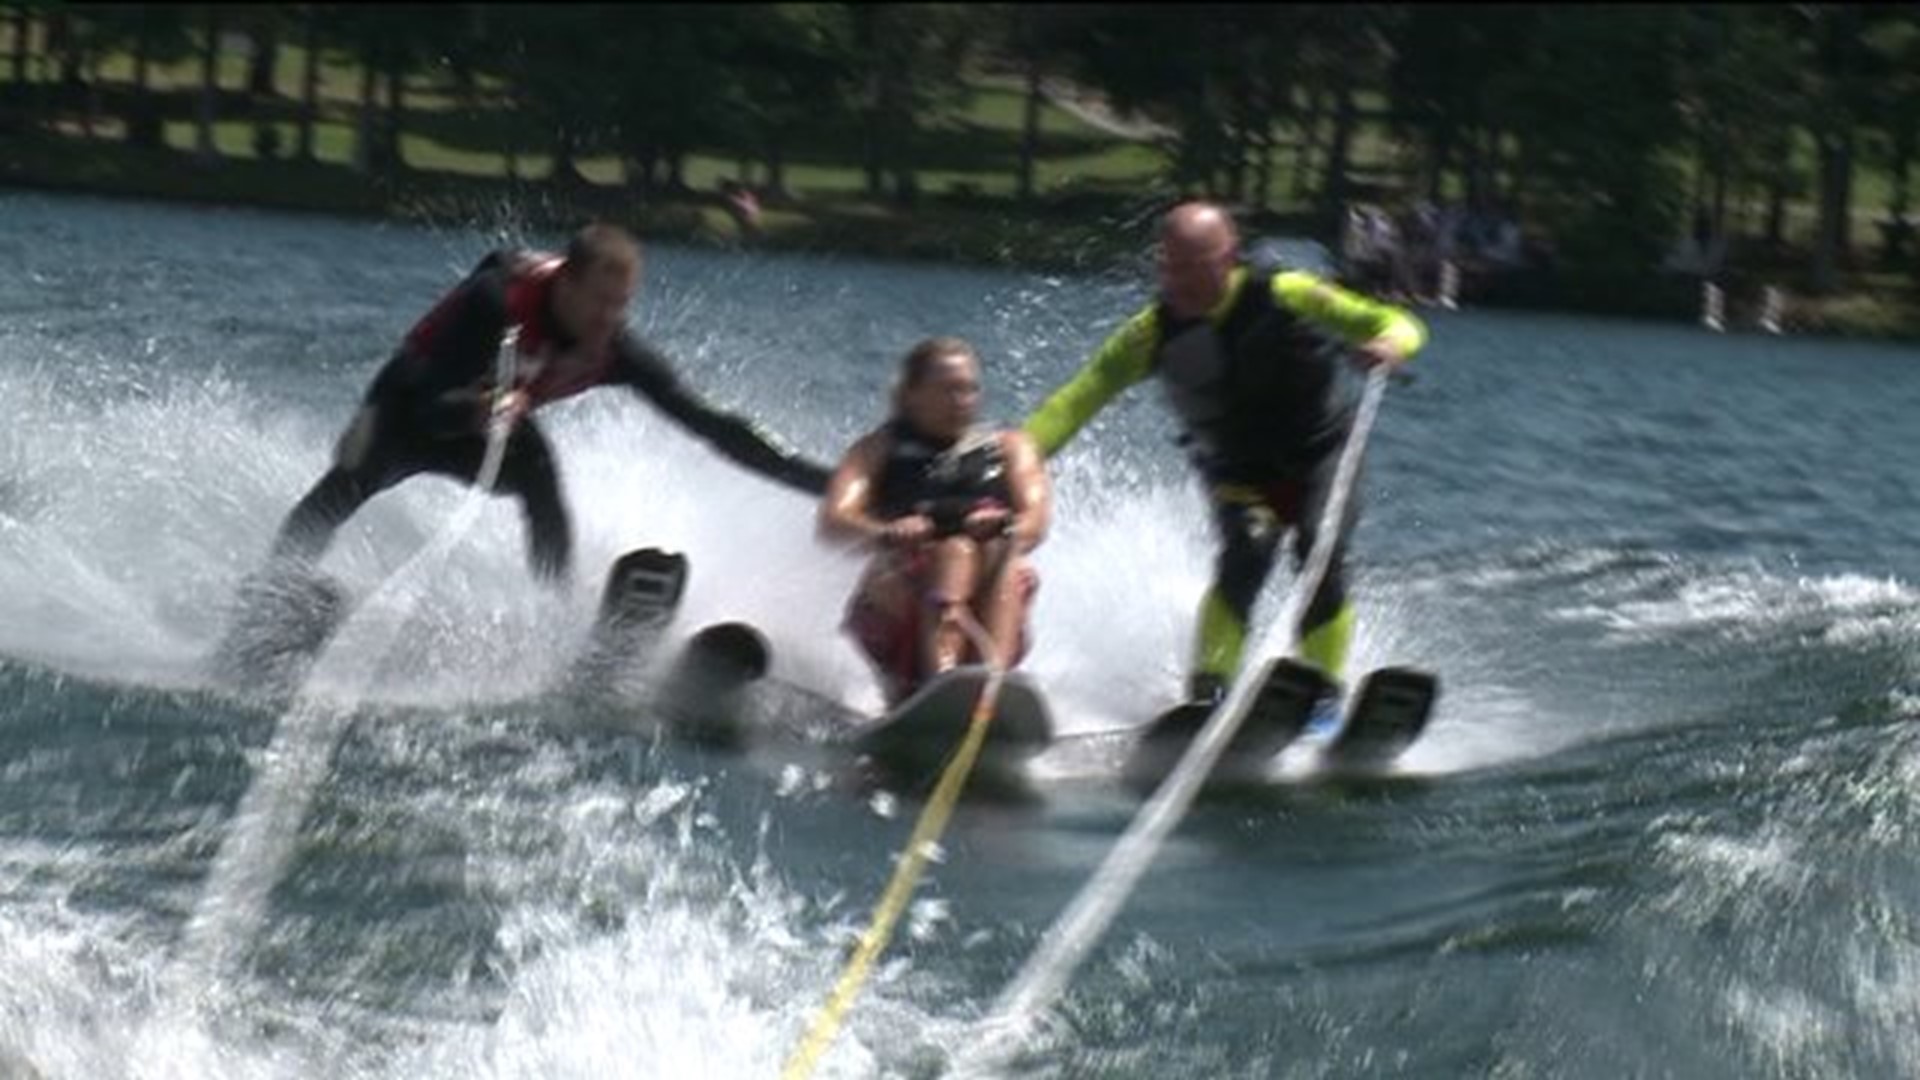 Adaptive Water Skiing Event Held in Lackawanna County